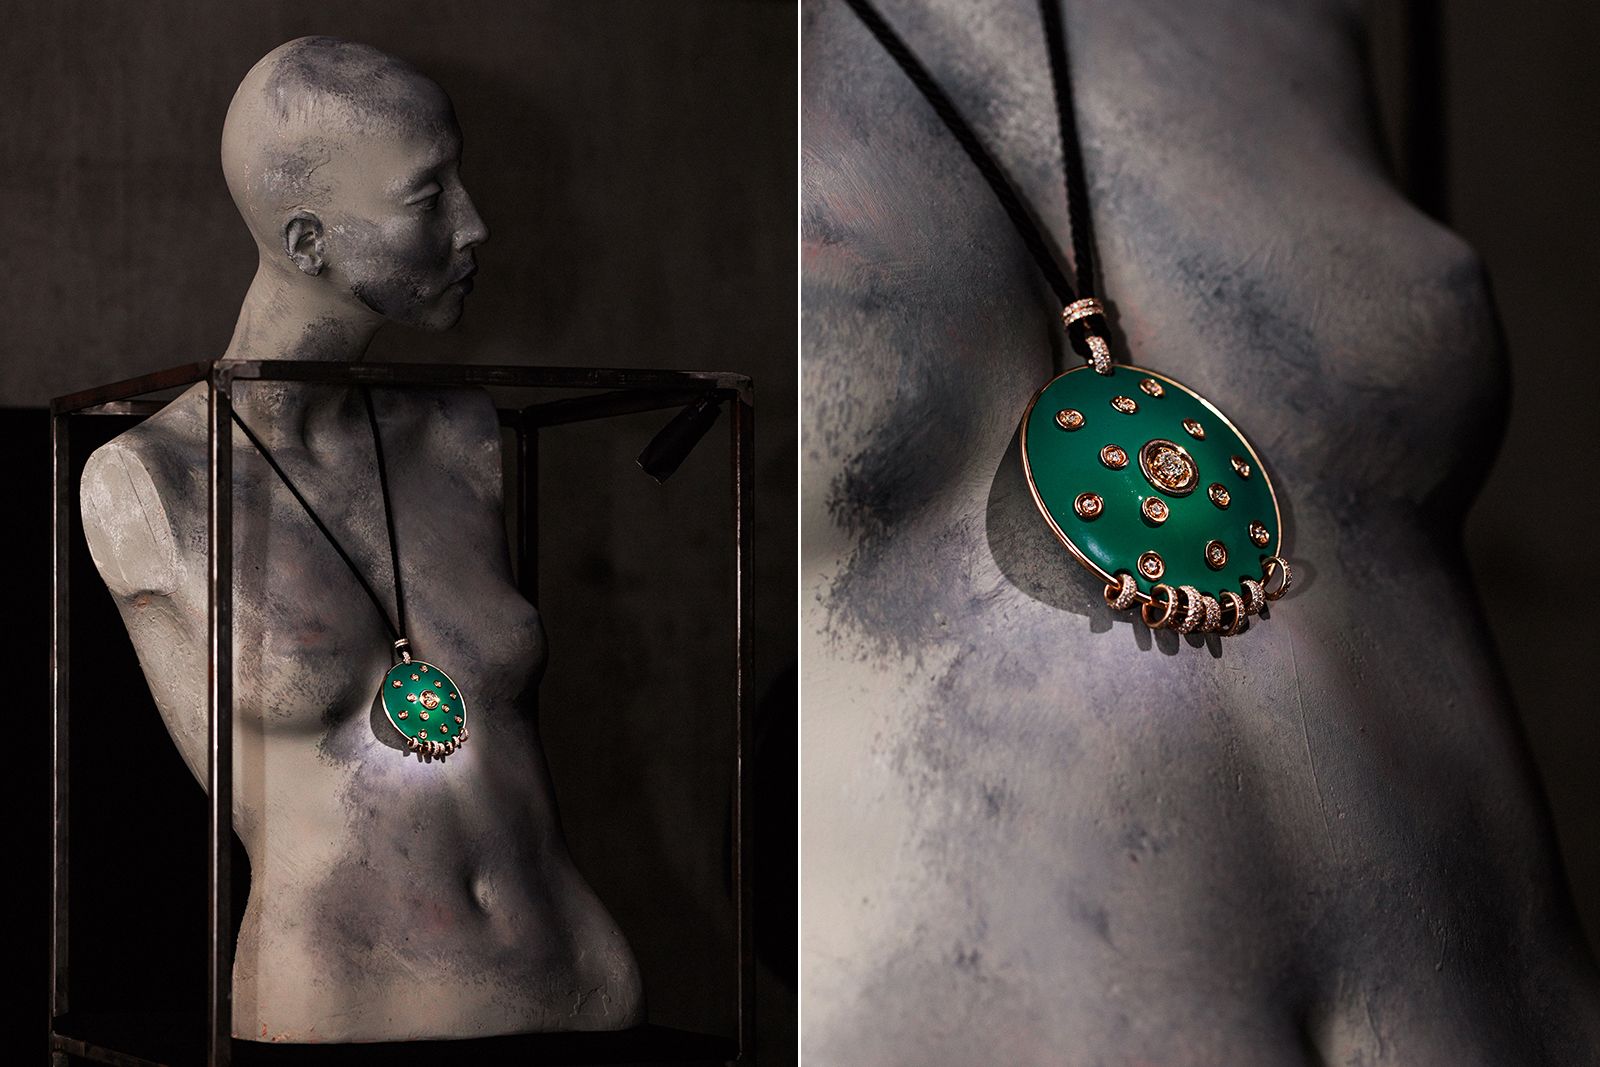 Wilfredo Rosado Tribu pendant in 18k rose gold and green nano-ceramic detail with white diamonds of 6.57 carats